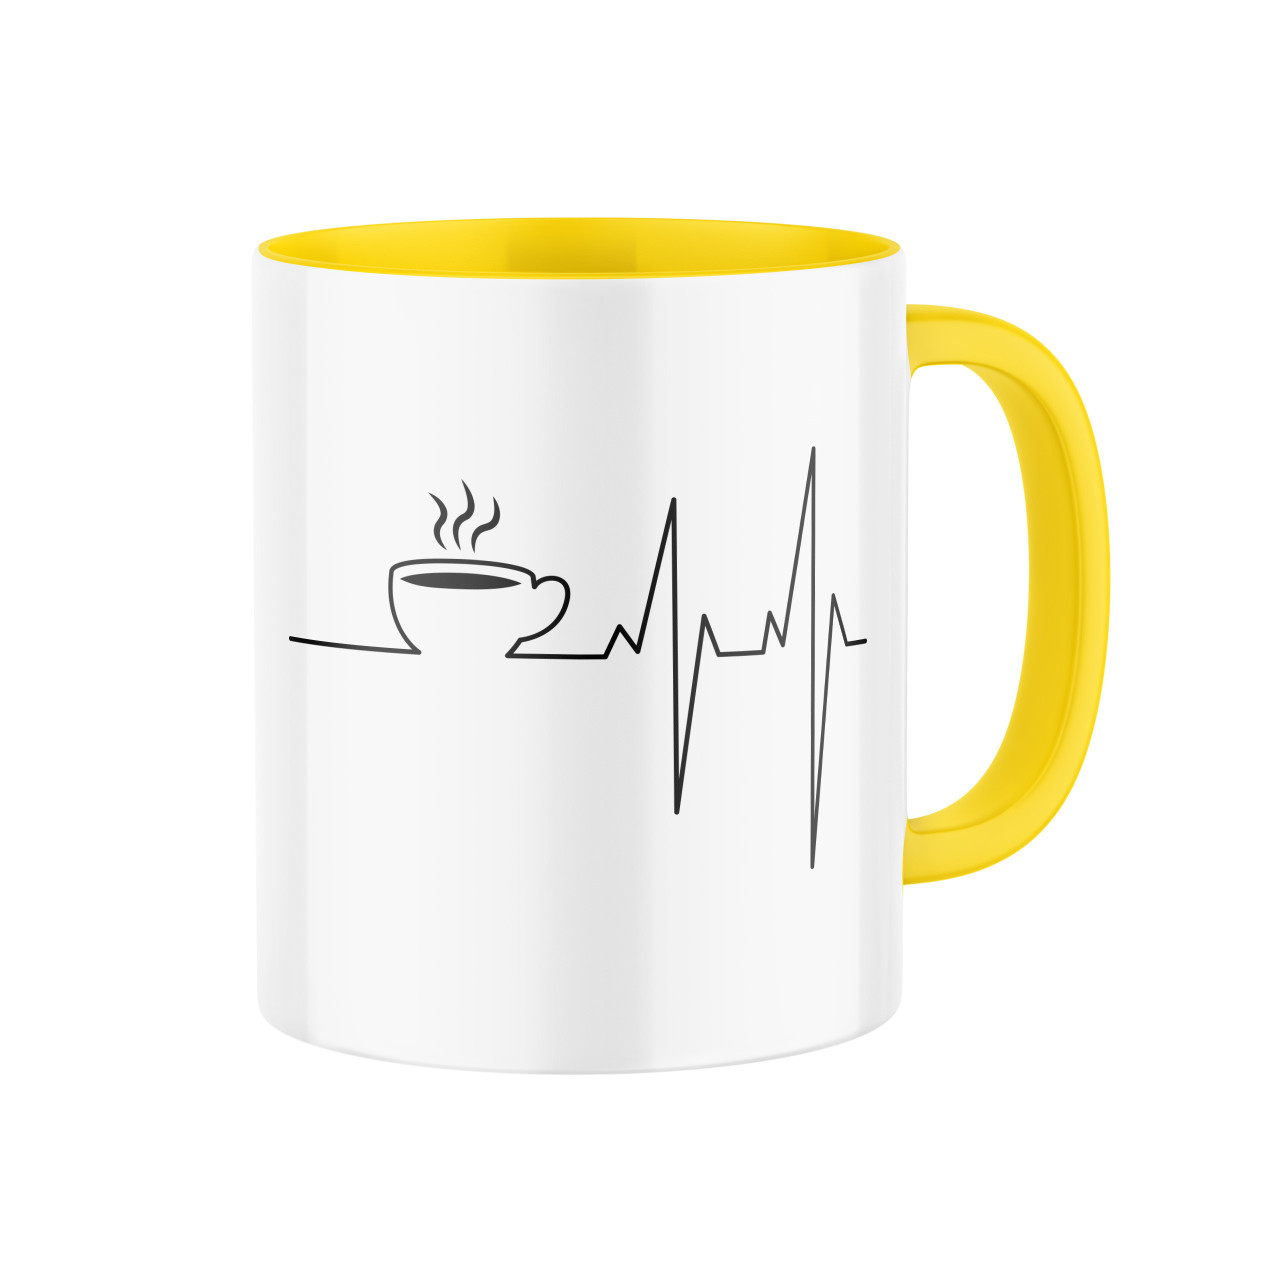 Keramický hrnek s potiskem Srdcový tep – káva